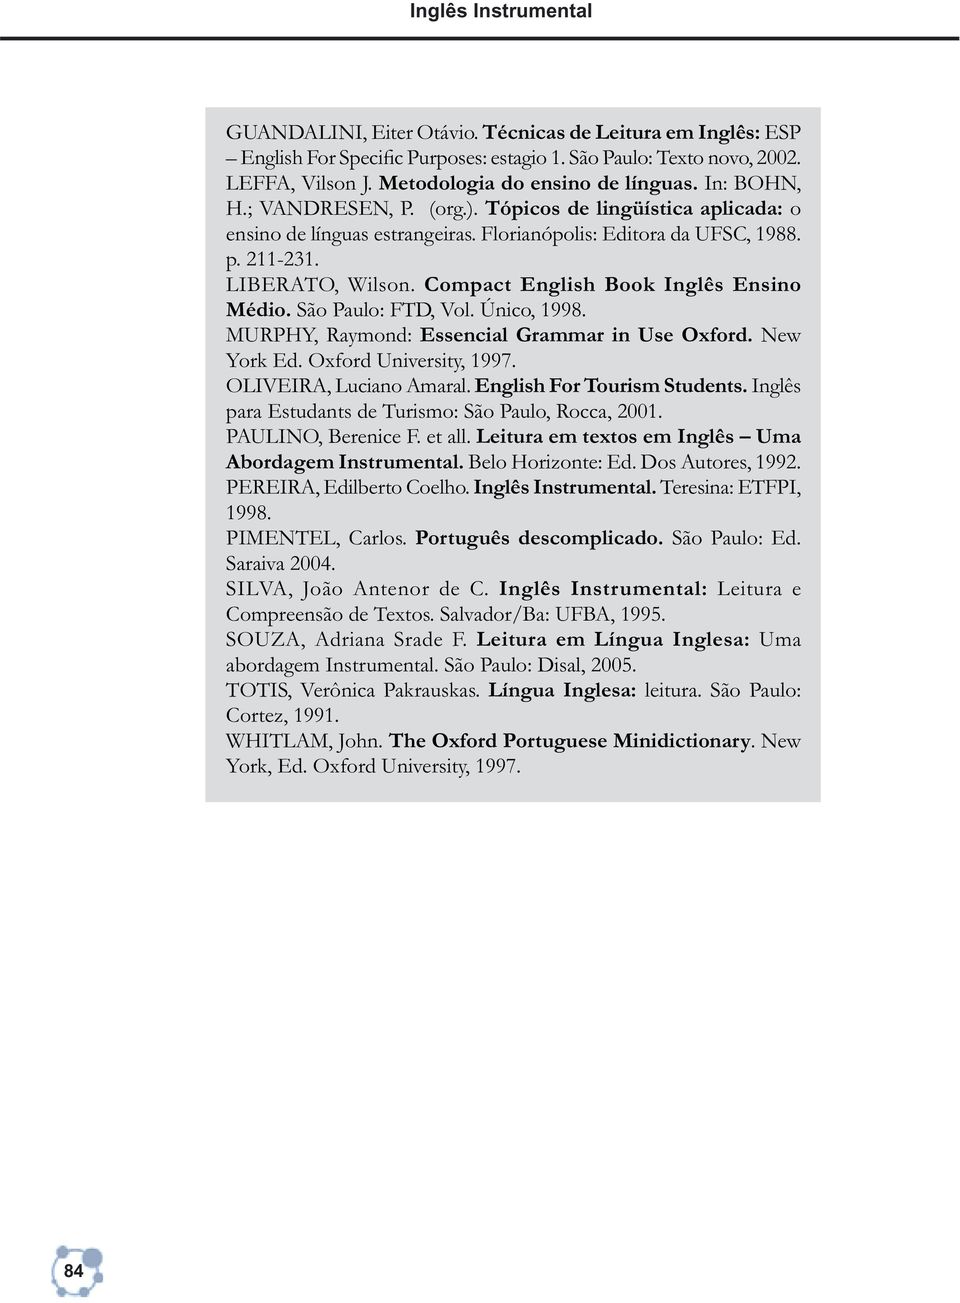 LIBERATO, Wilson. Compact English Book Inglês Ensino Médio. São Paulo: FTD, Vol. Único, 1998. MURPHY, Raymond: Essencial Grammar in Use Oxford. New York Ed. Oxford University, 1997.